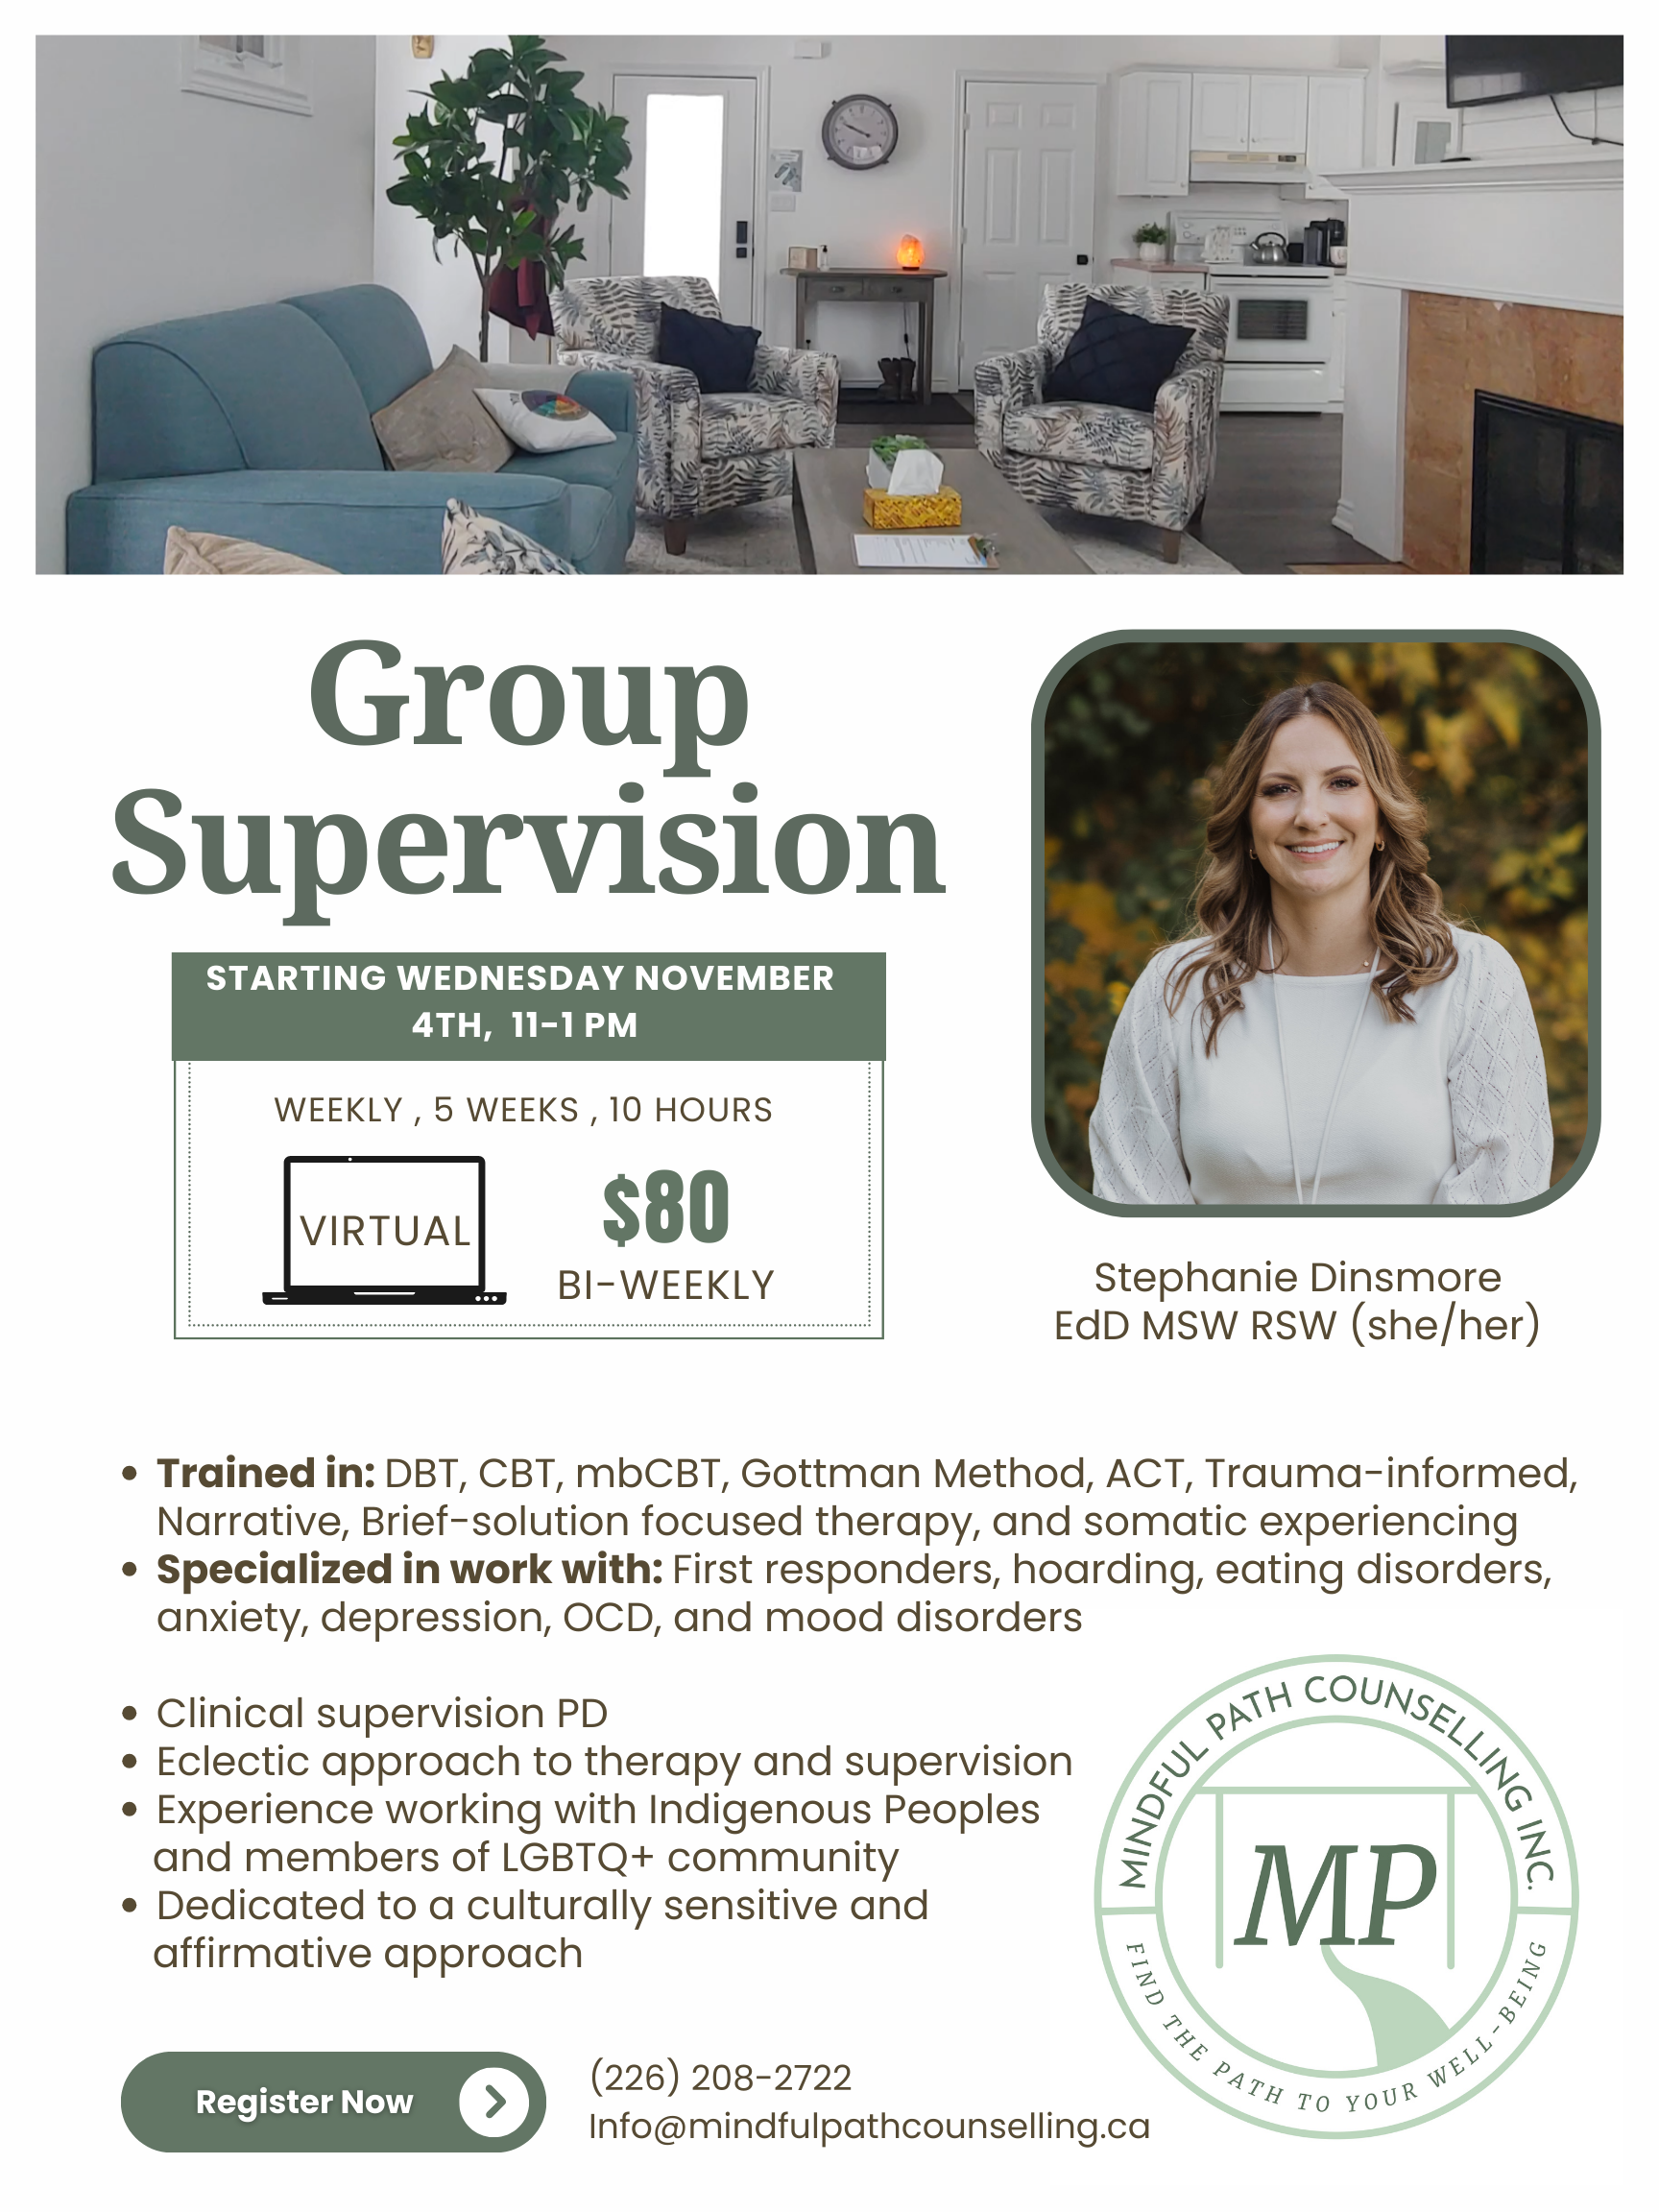 Group Supervision November dates